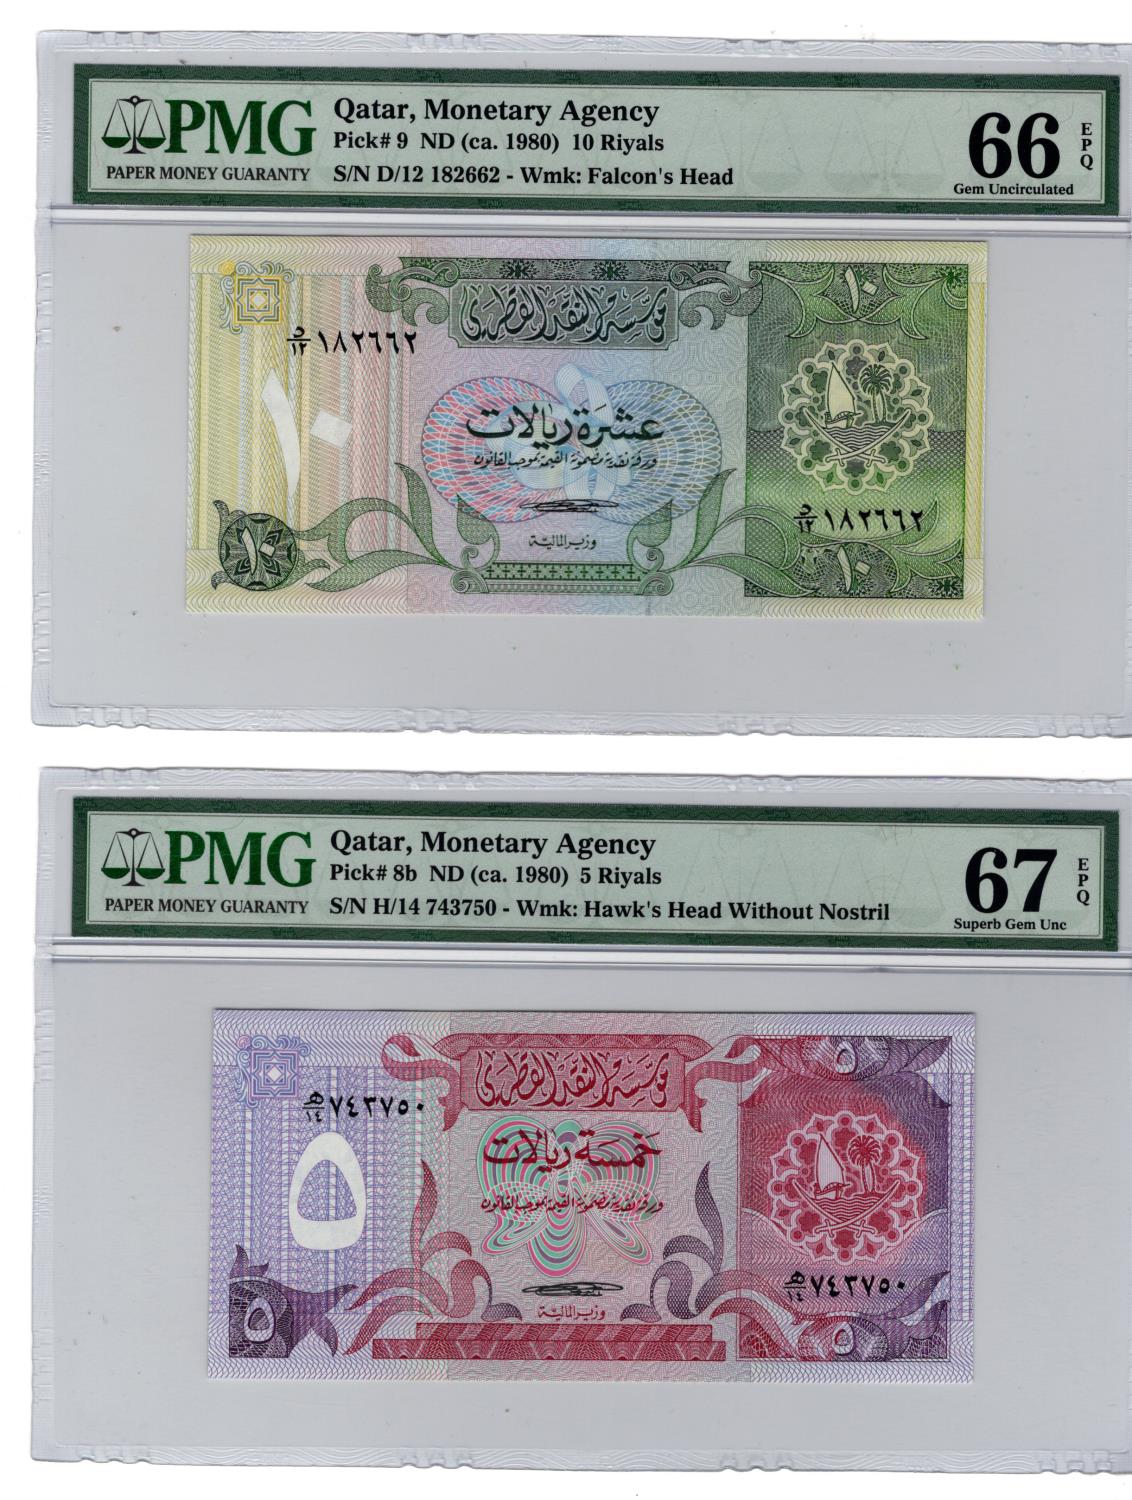 Qatar (2), 5 Riyals not dated (issued 1980's), serial H/14 743750 (TBB B108b, Pick8b) in PMG